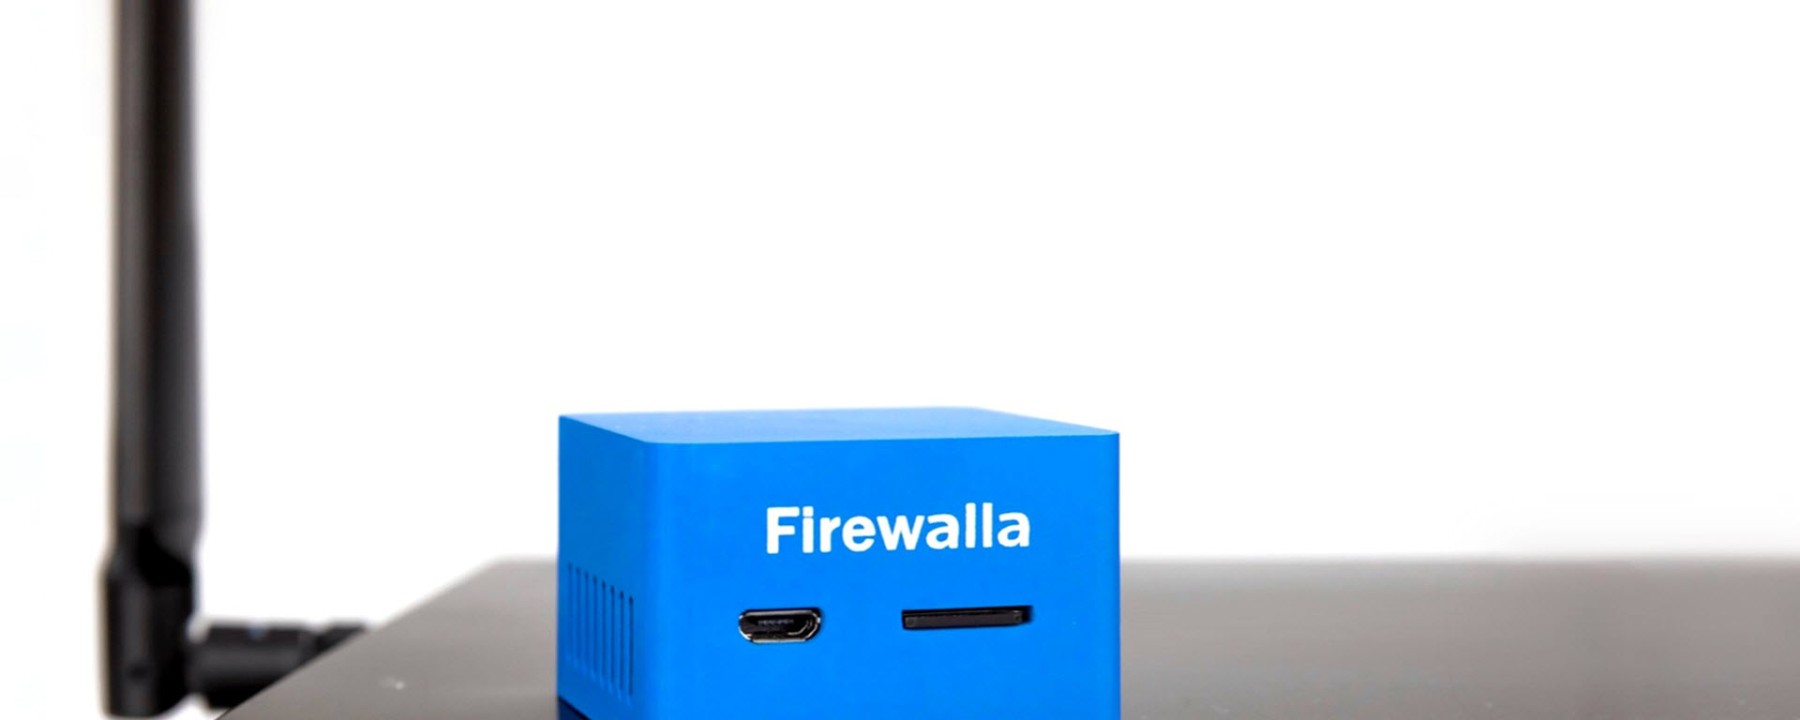 Firewalla blue sorteo